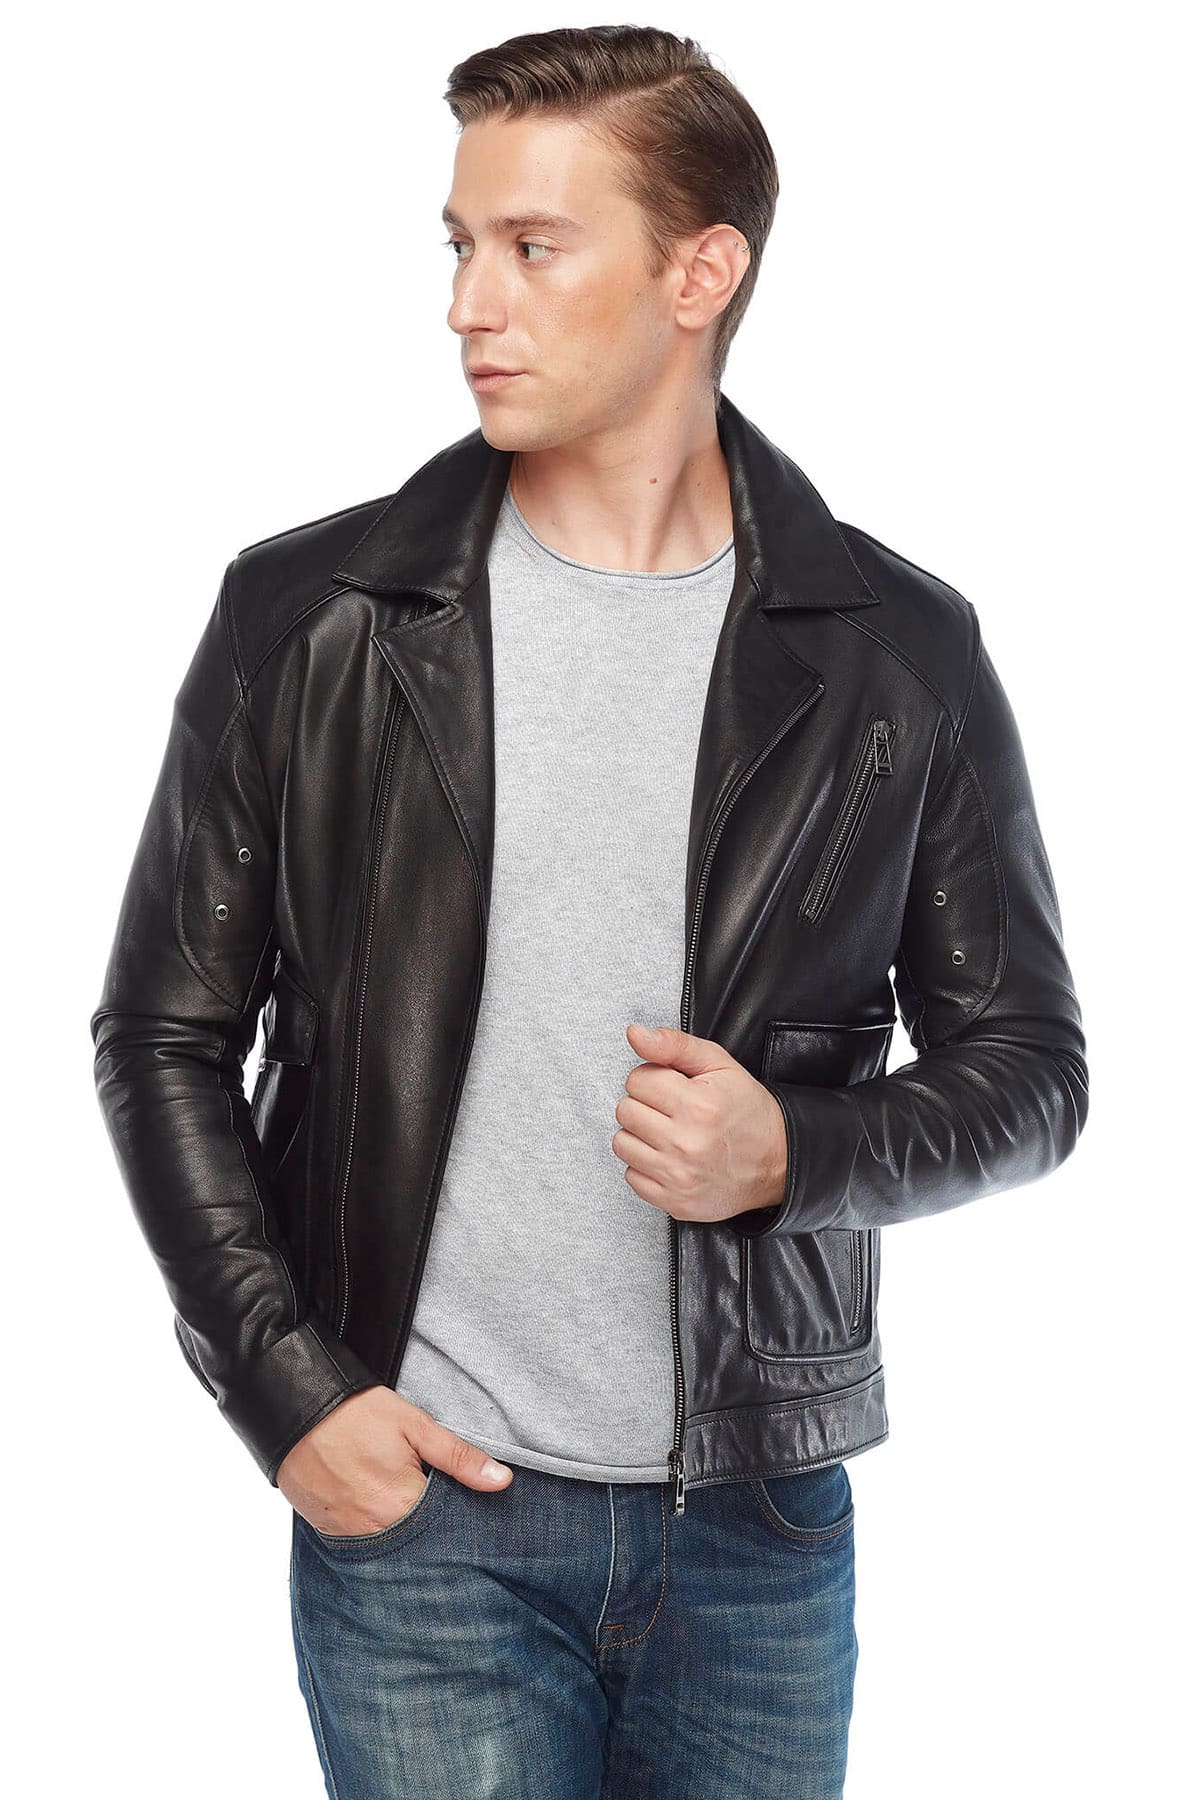 Orlando Bloom Genuine Leather Coat Black Pose